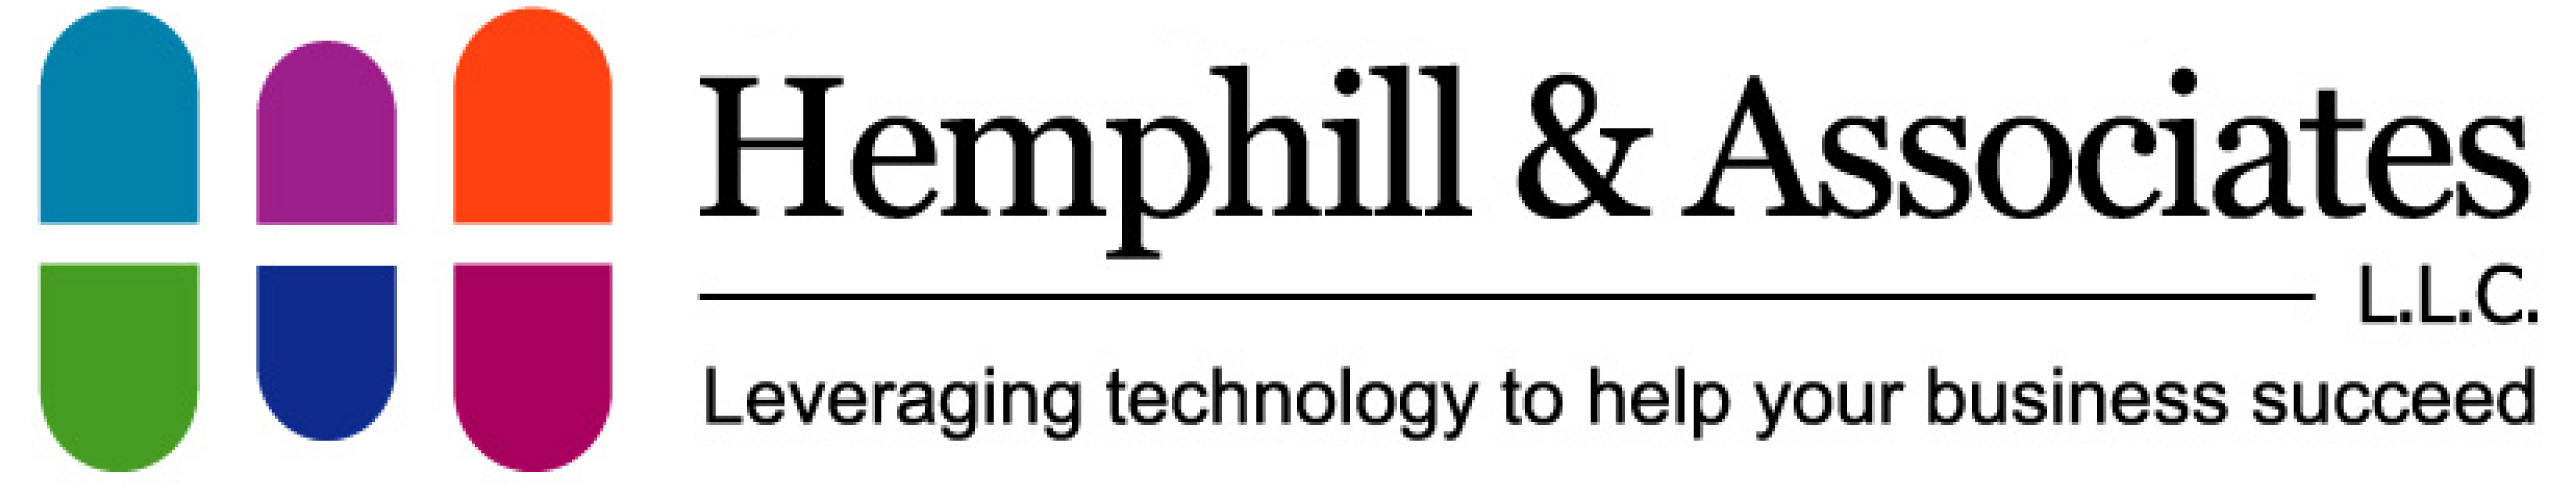 IT Business Consulting Hemphill & Associates, L.L.C.